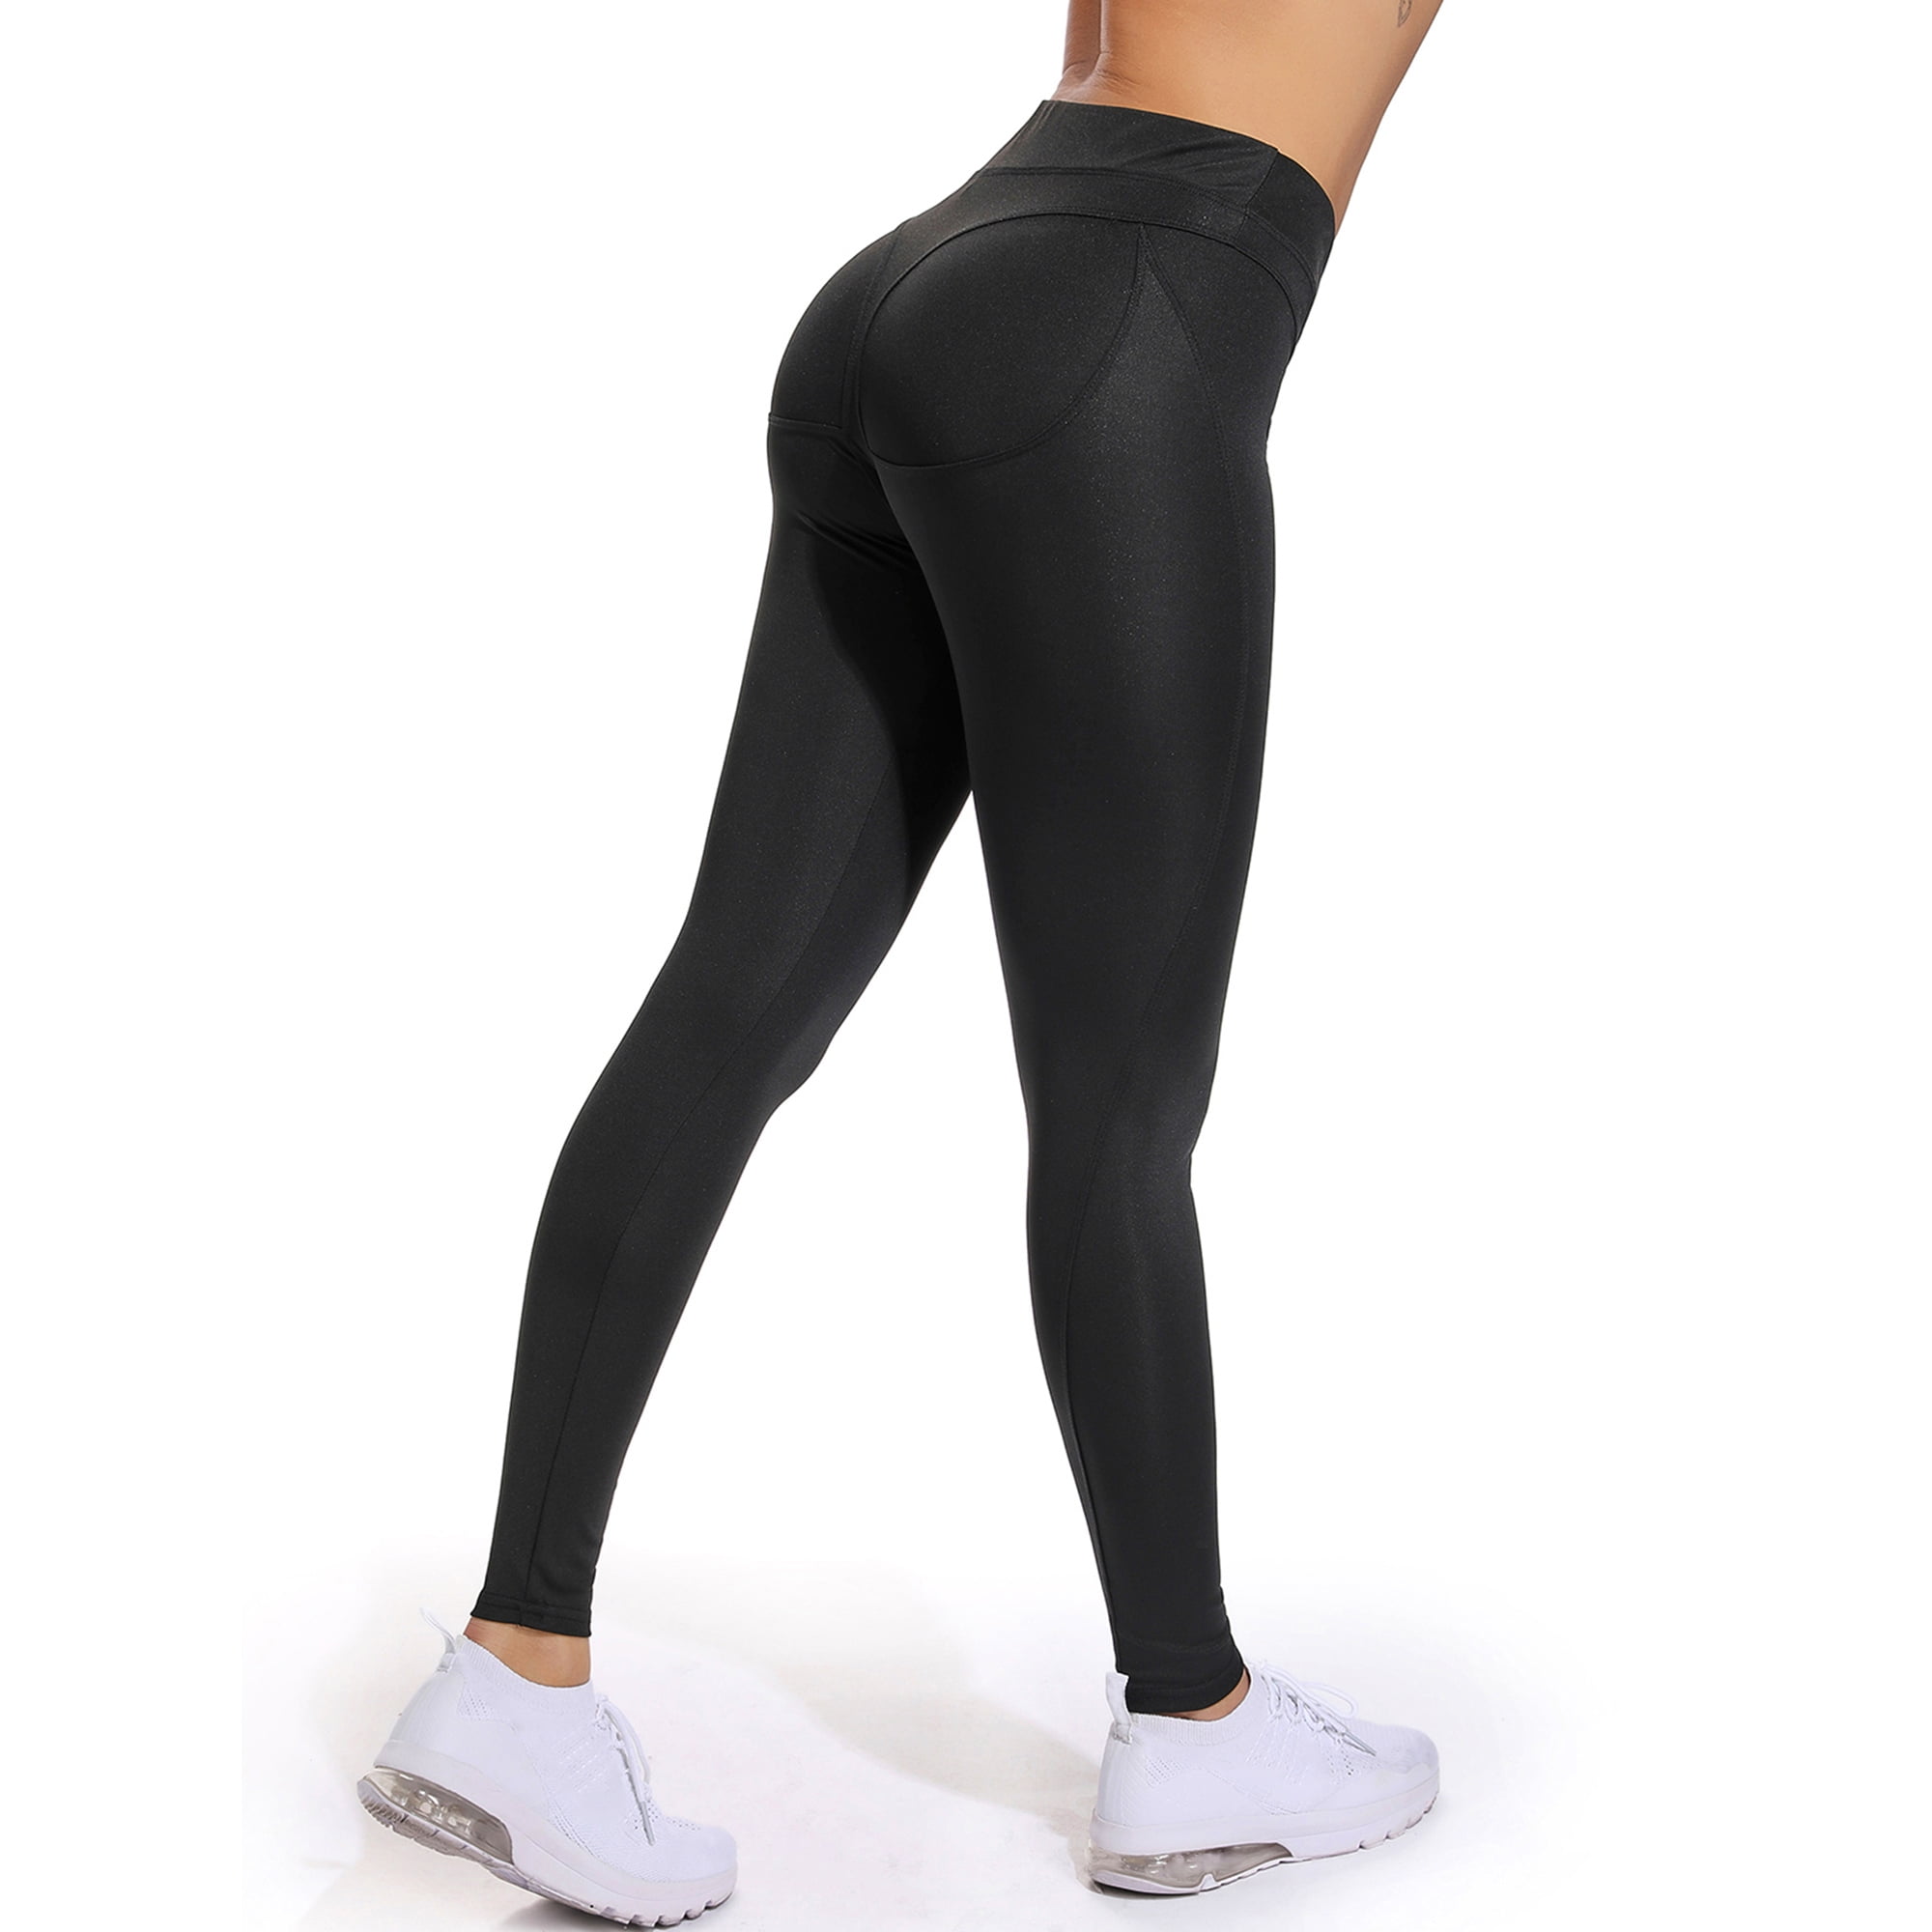 Yoga Pants Women Workout Sport High Waisted Legging Fitness